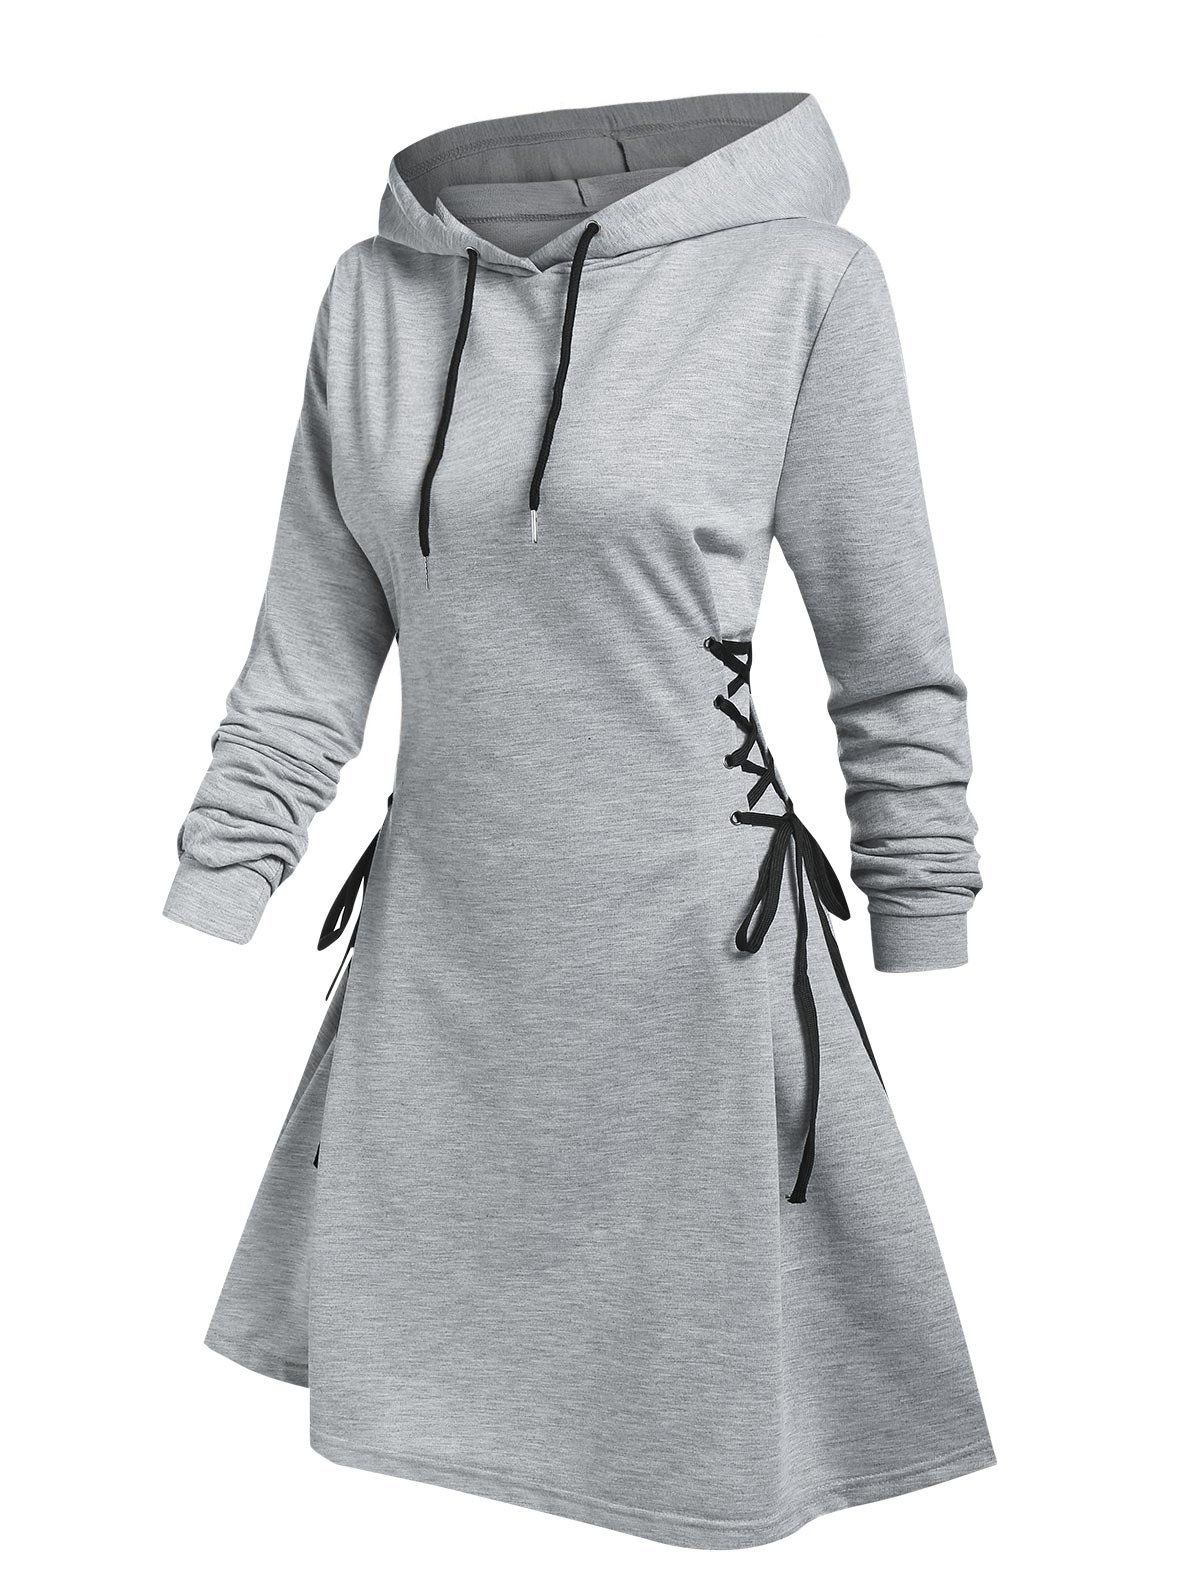 Lace Up Mini Hoodie Dress - GRAY XL